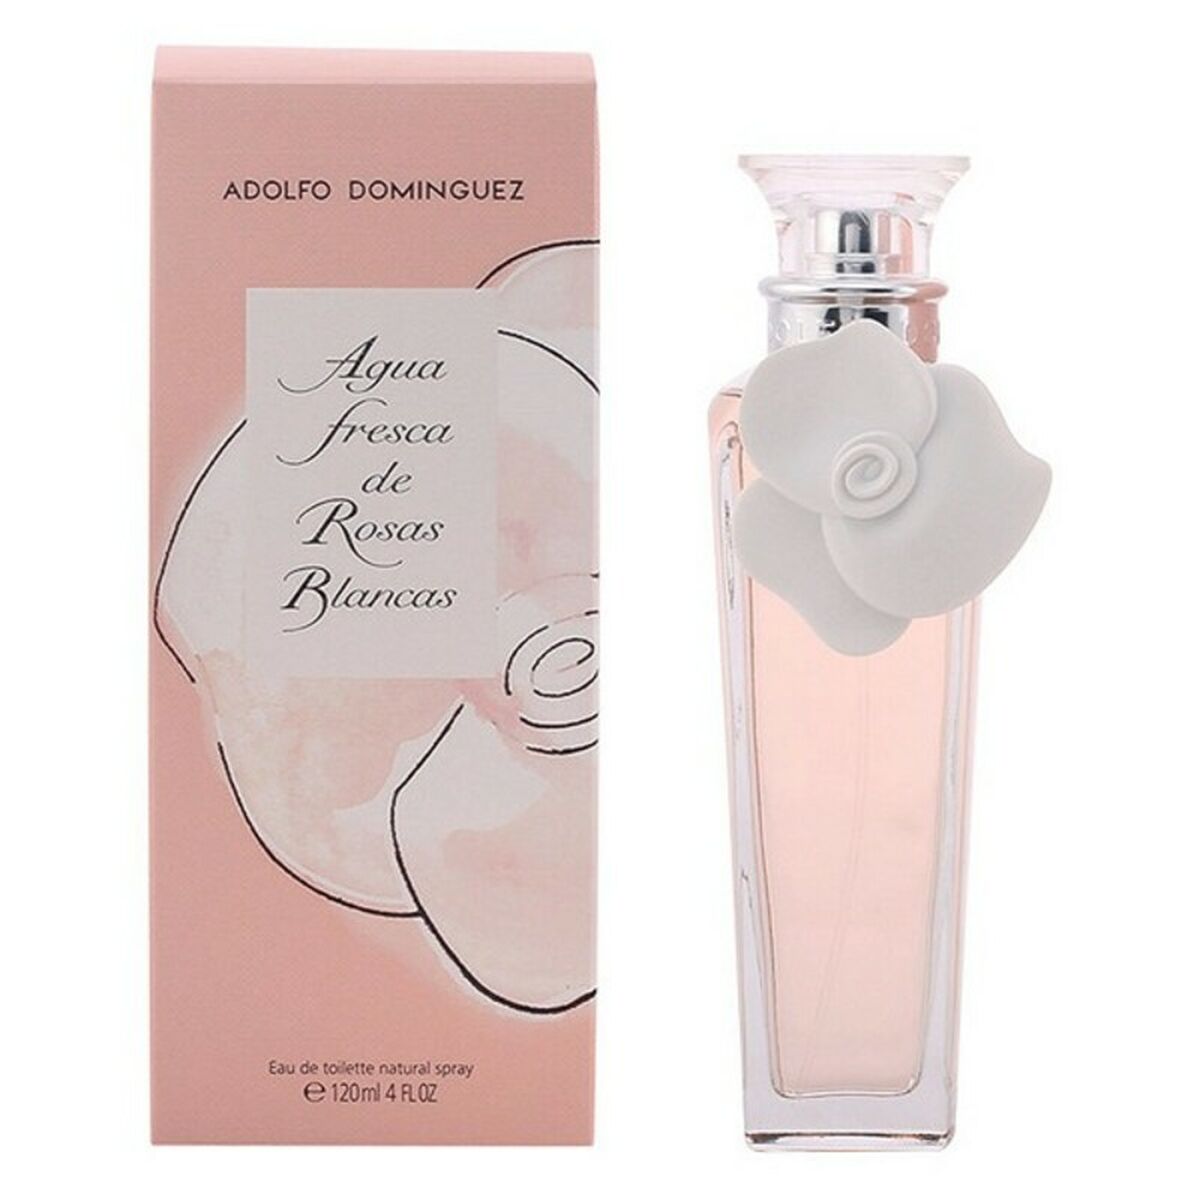 Perfume des femmes Agua Fresca Rosas Blancas Adolfo Dominguez EDT (120 ml)